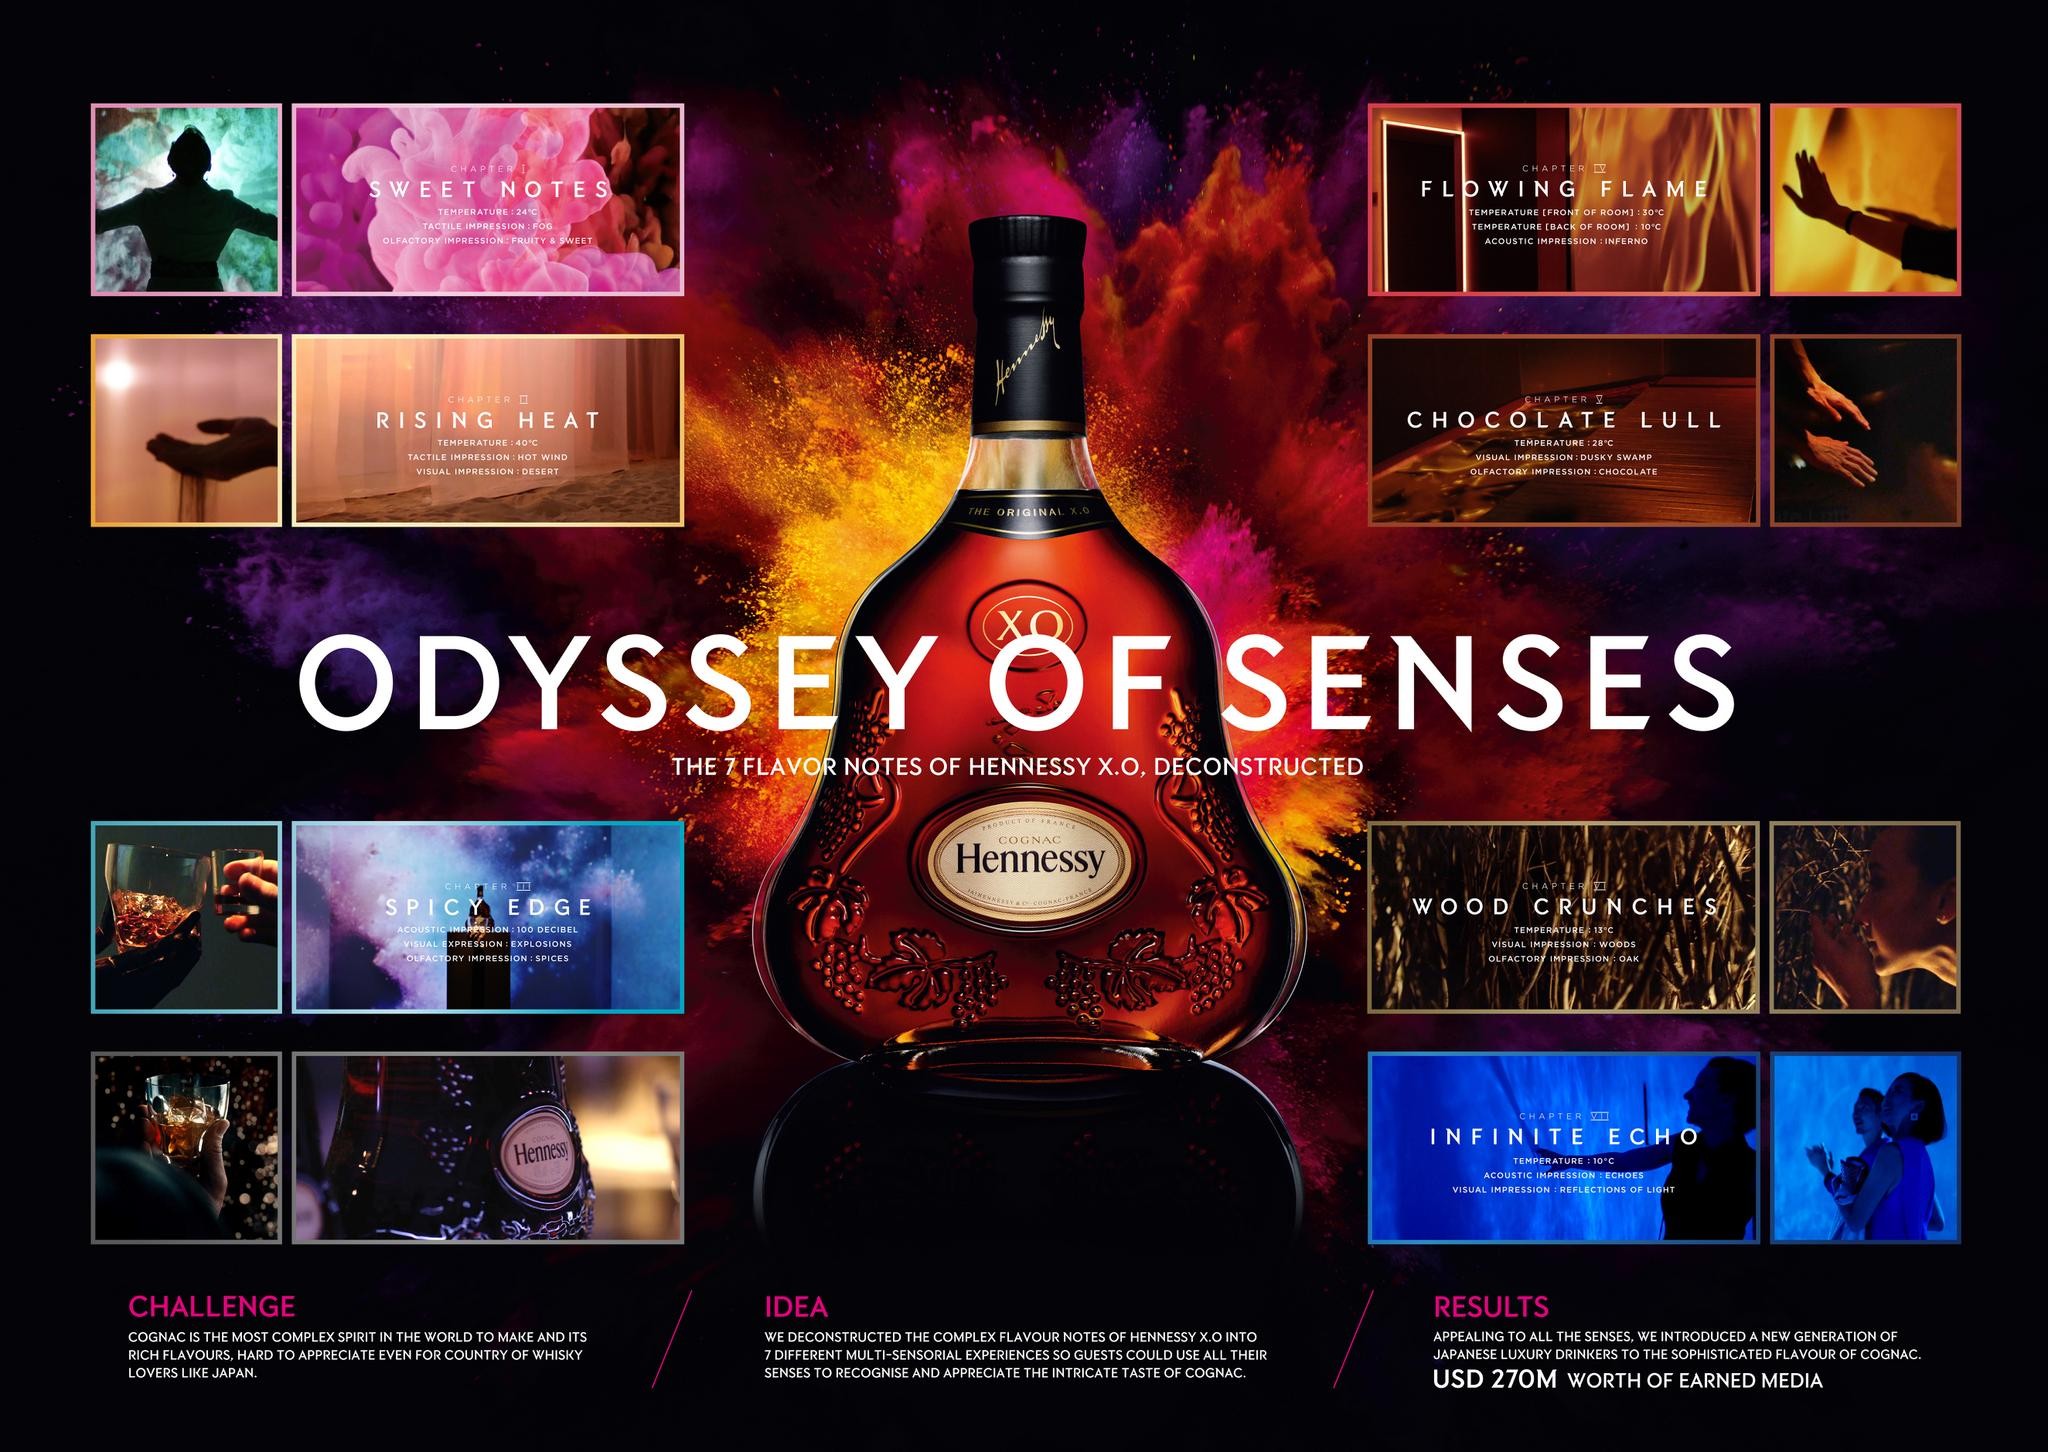 Odyssey of Senses by Hennessy X.O